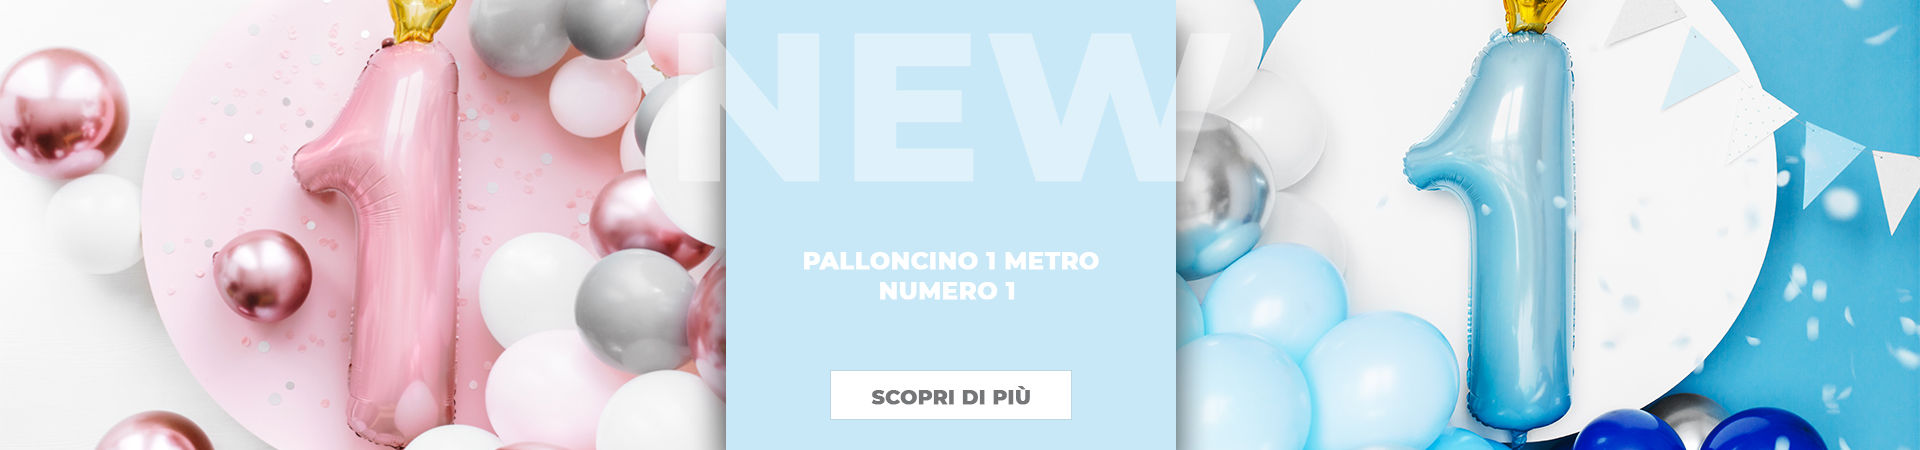 Palloncino